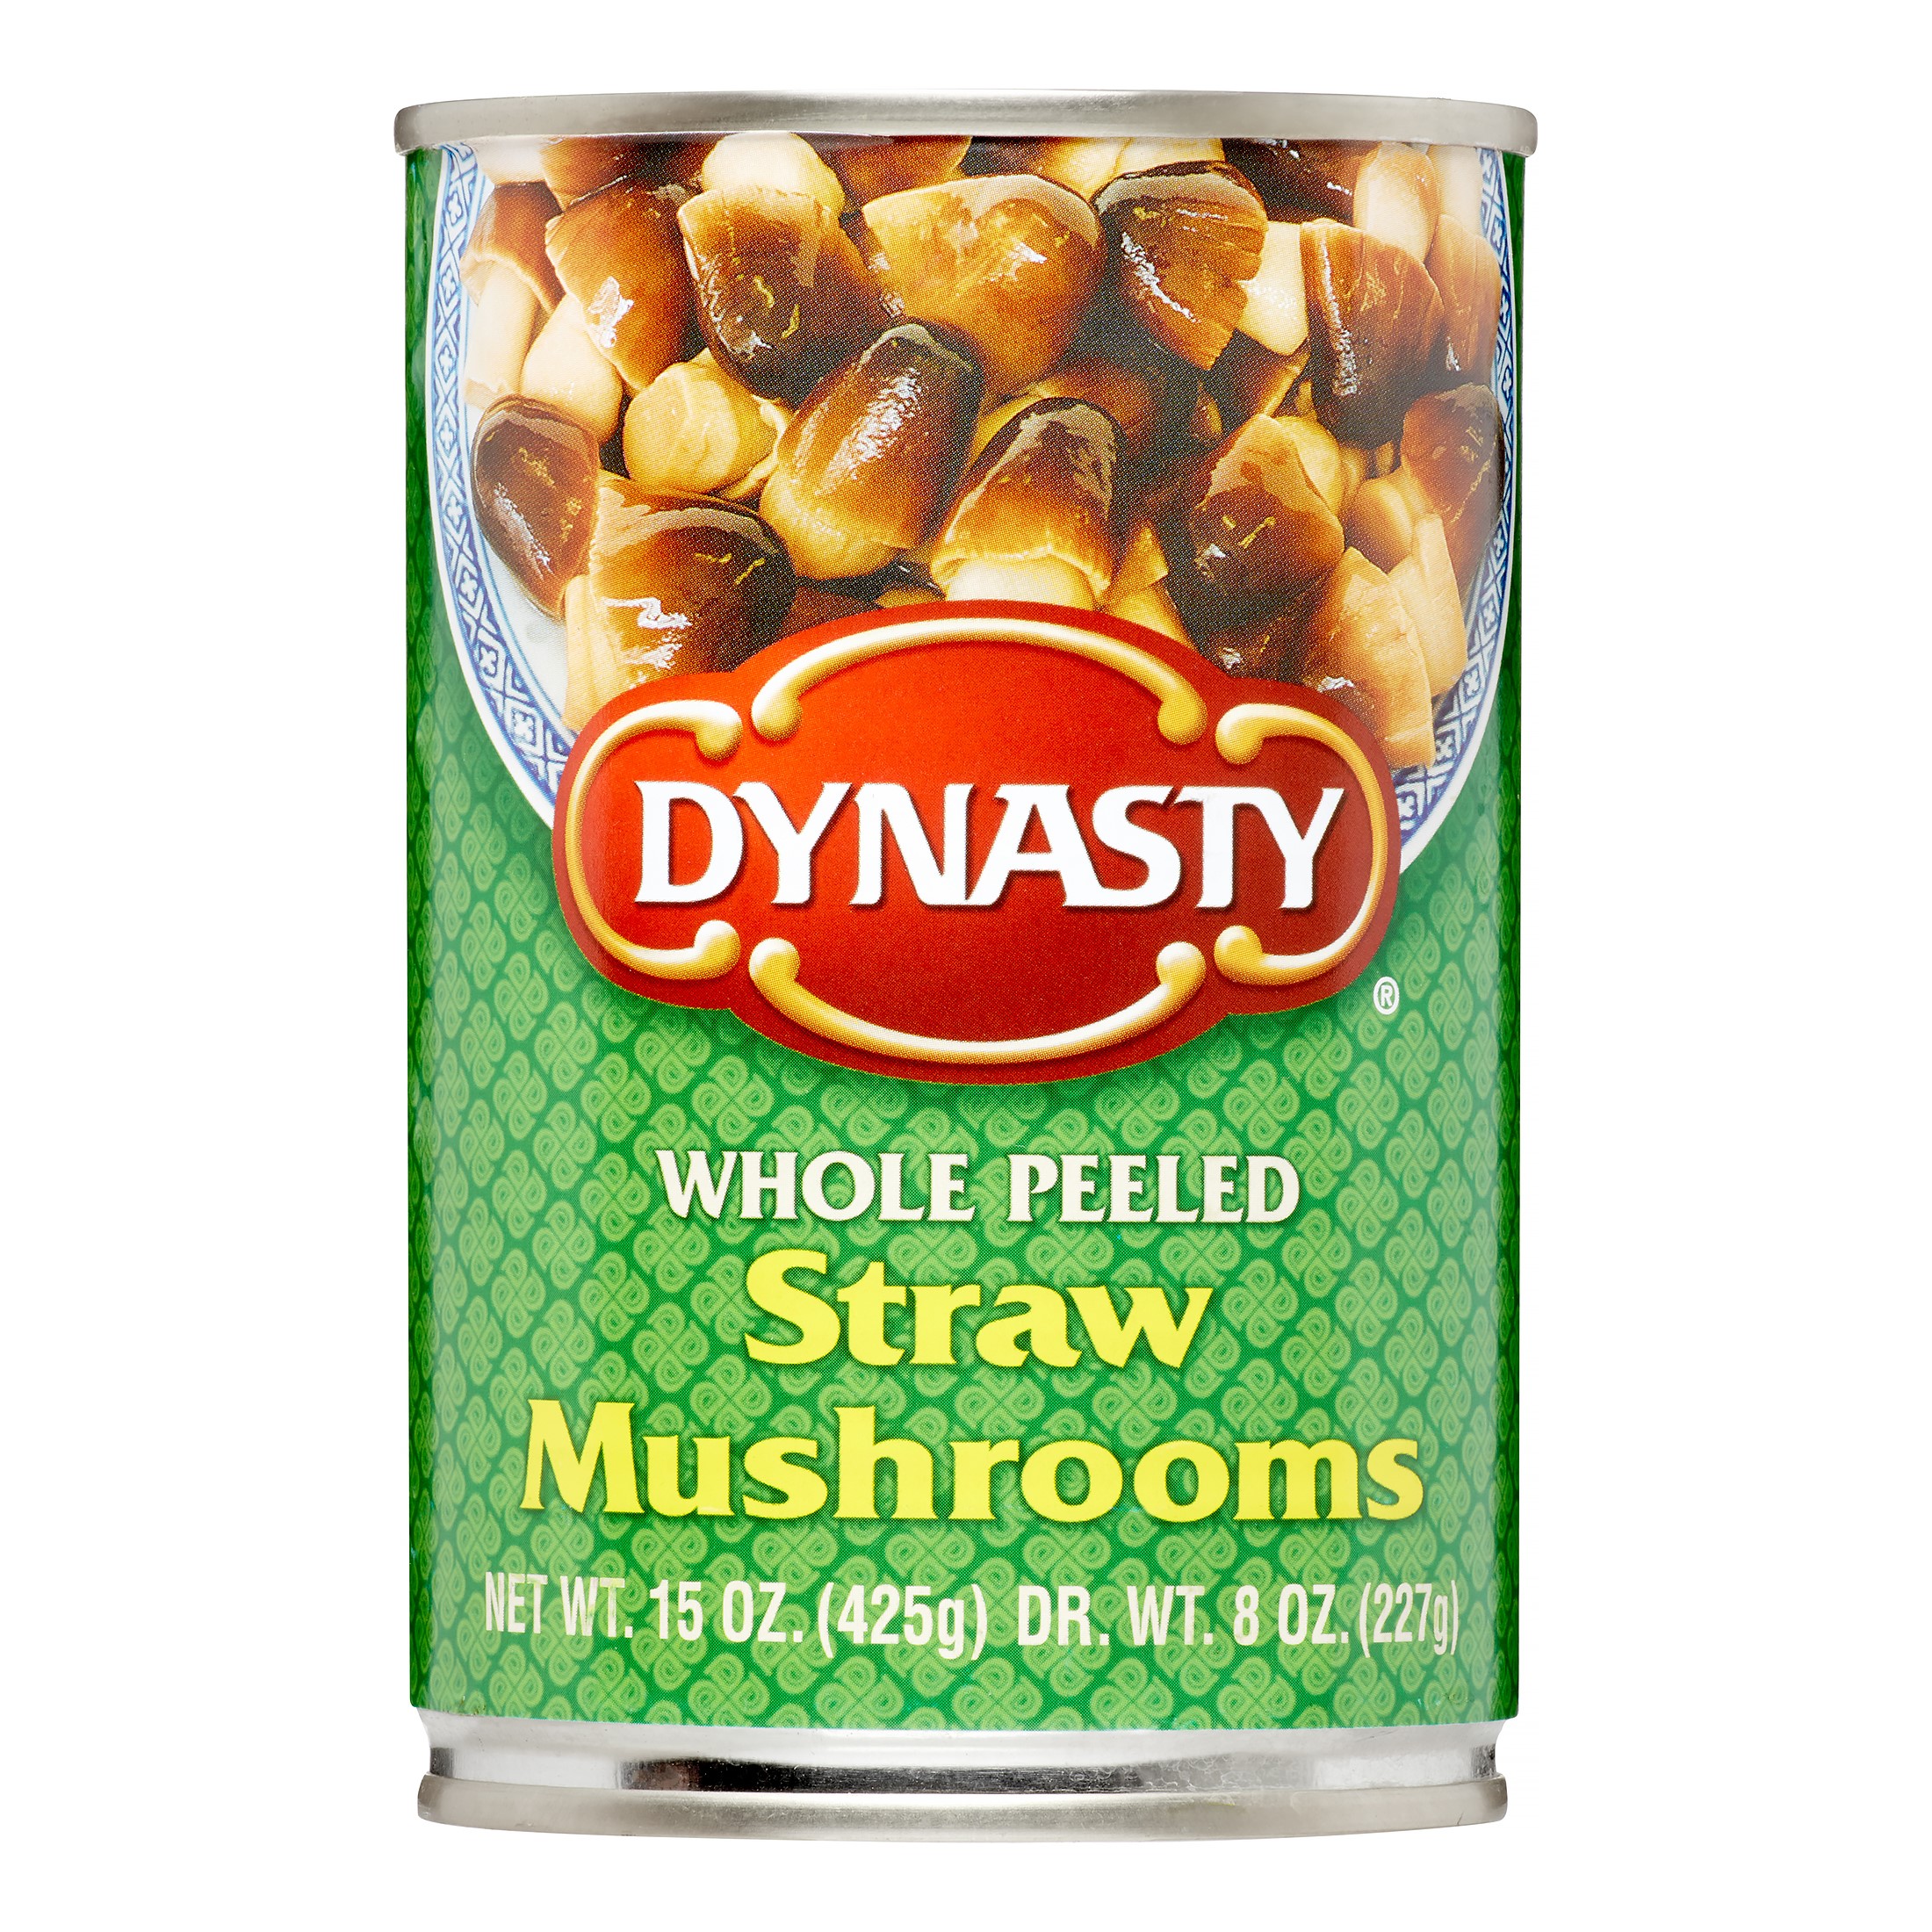 Dynasty Whole Peeled Straw Mushrooms, 15 oz can - image 1 of 3